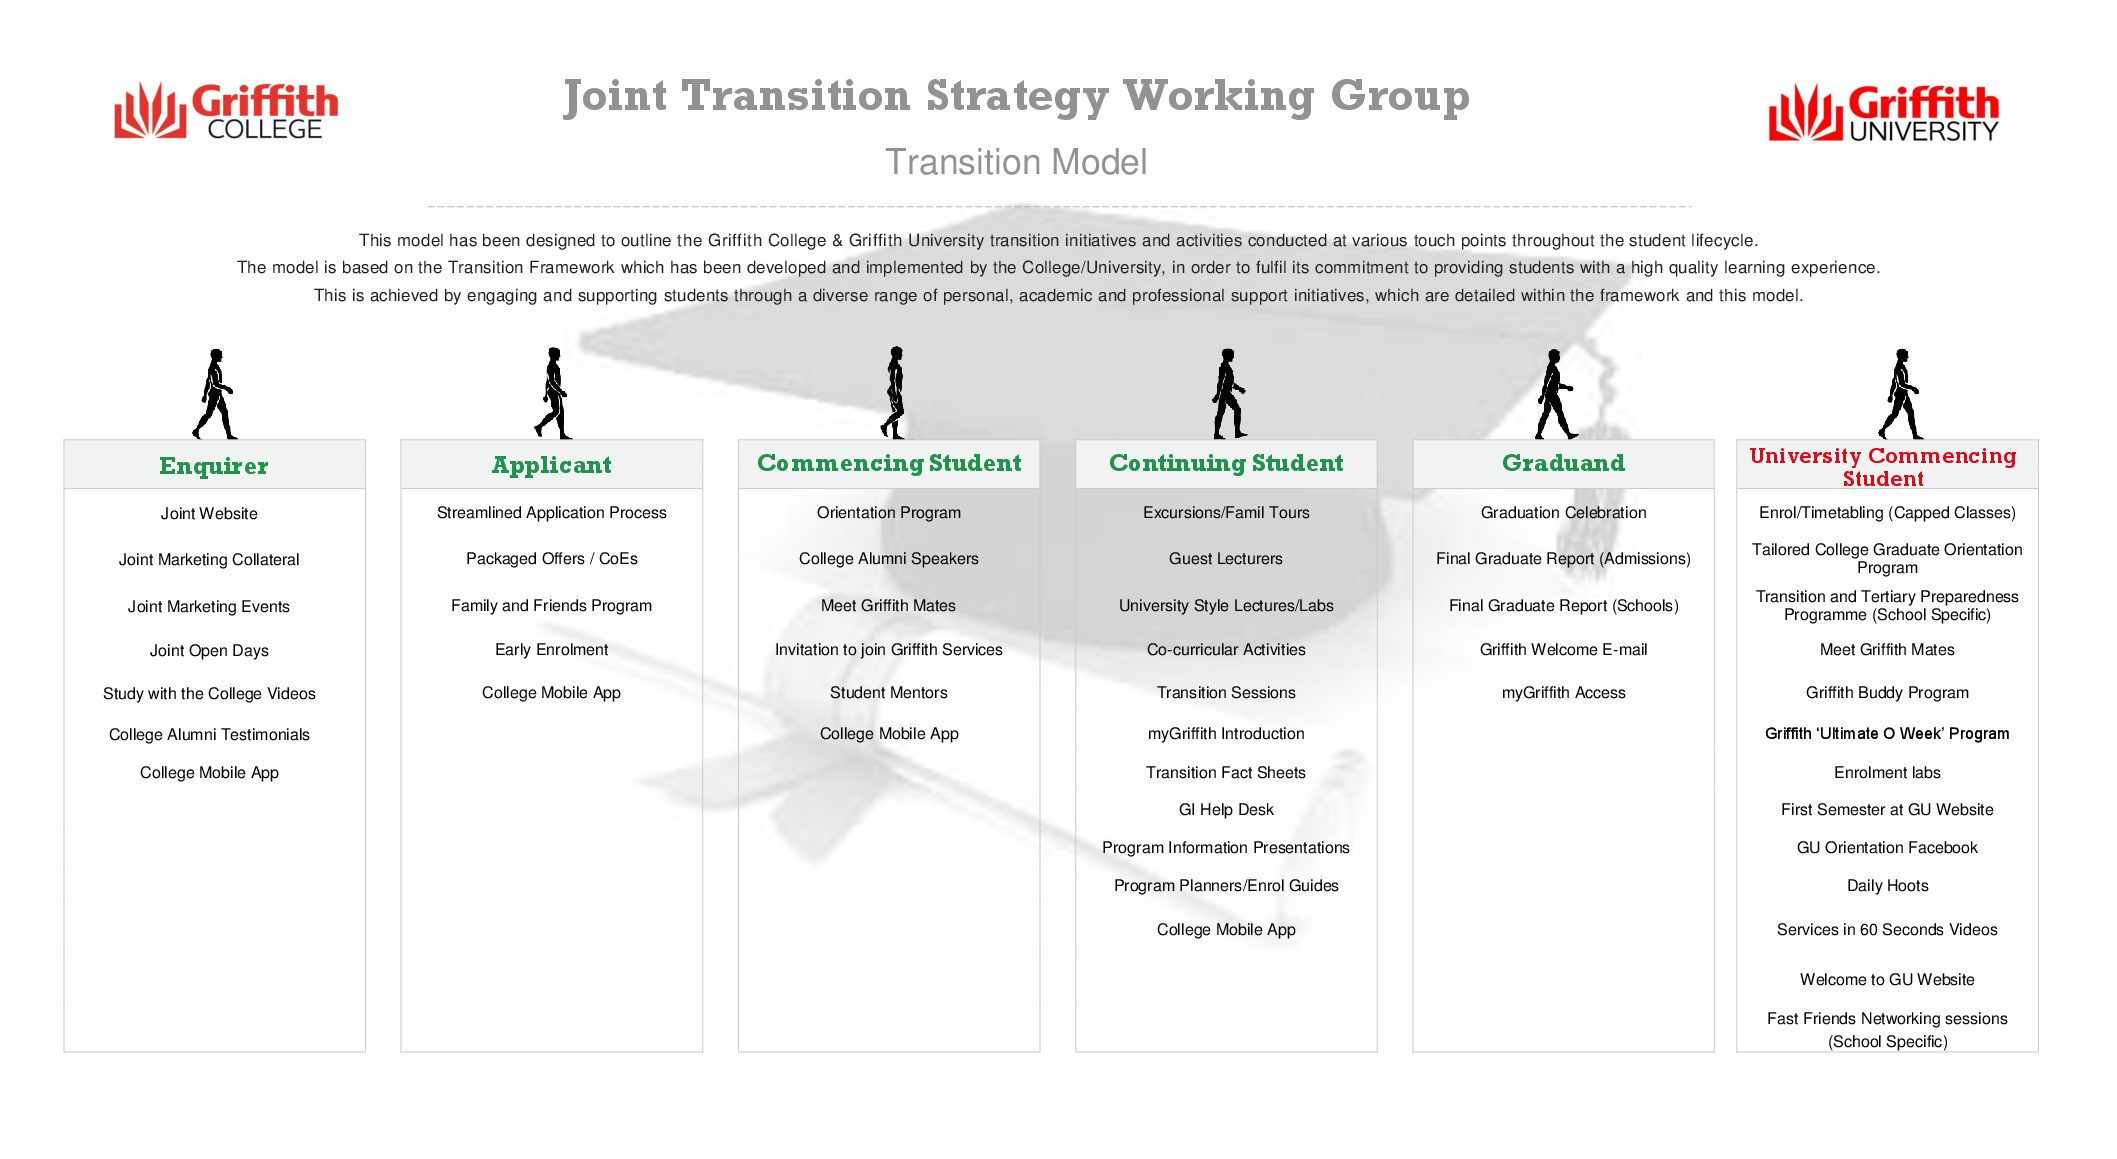 JTSWG_Transition_Model_160512